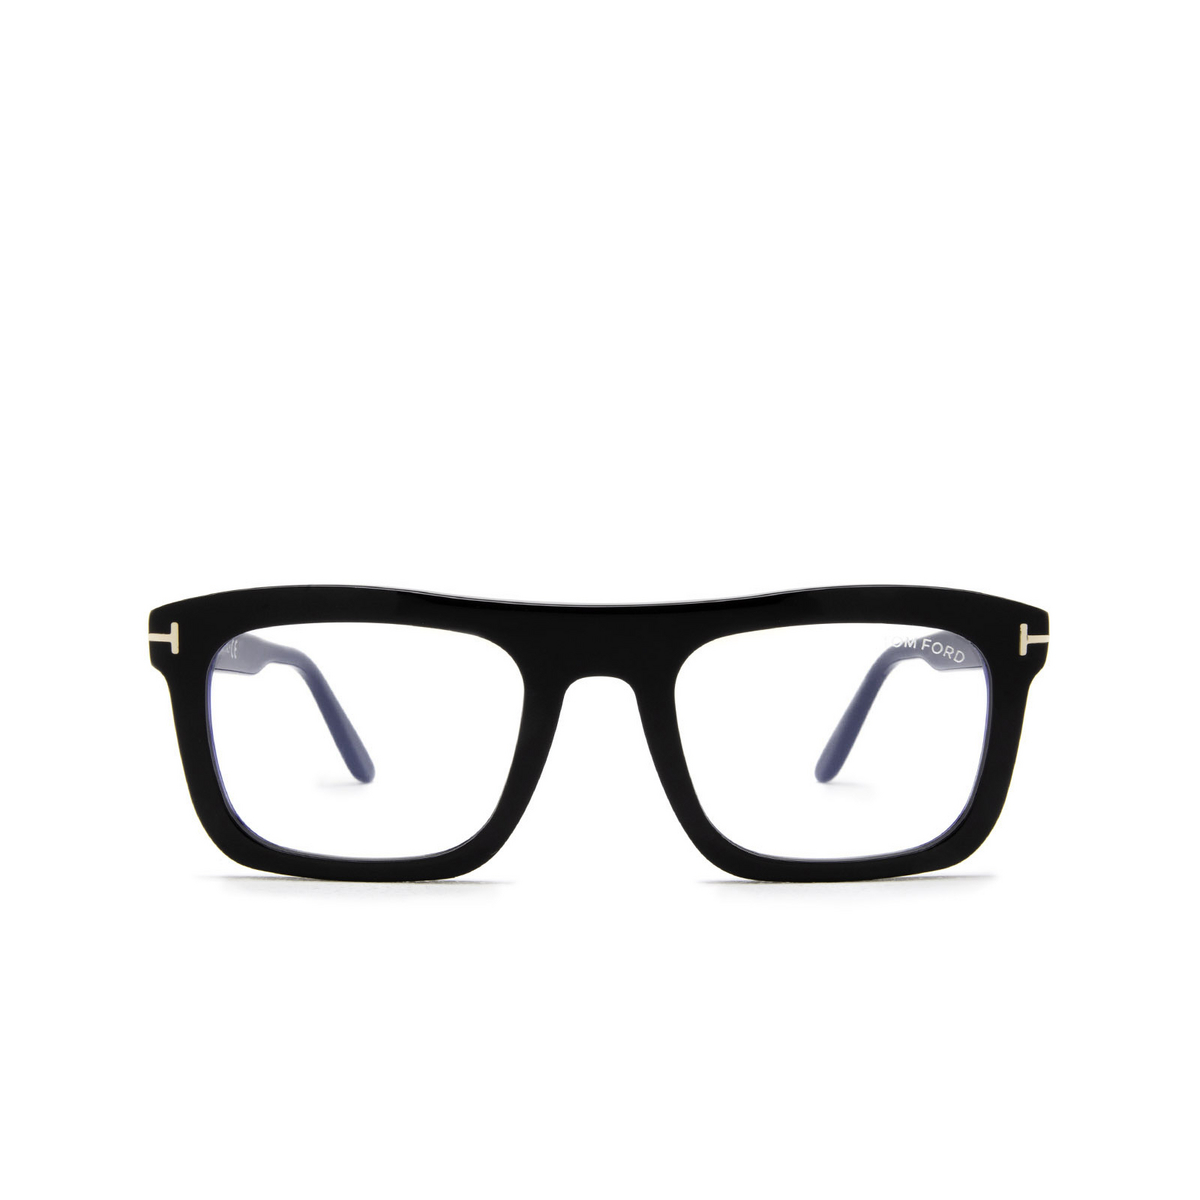 Tom Ford® Rectangle Eyeglasses: FT5757-B color Black 001 - front view.